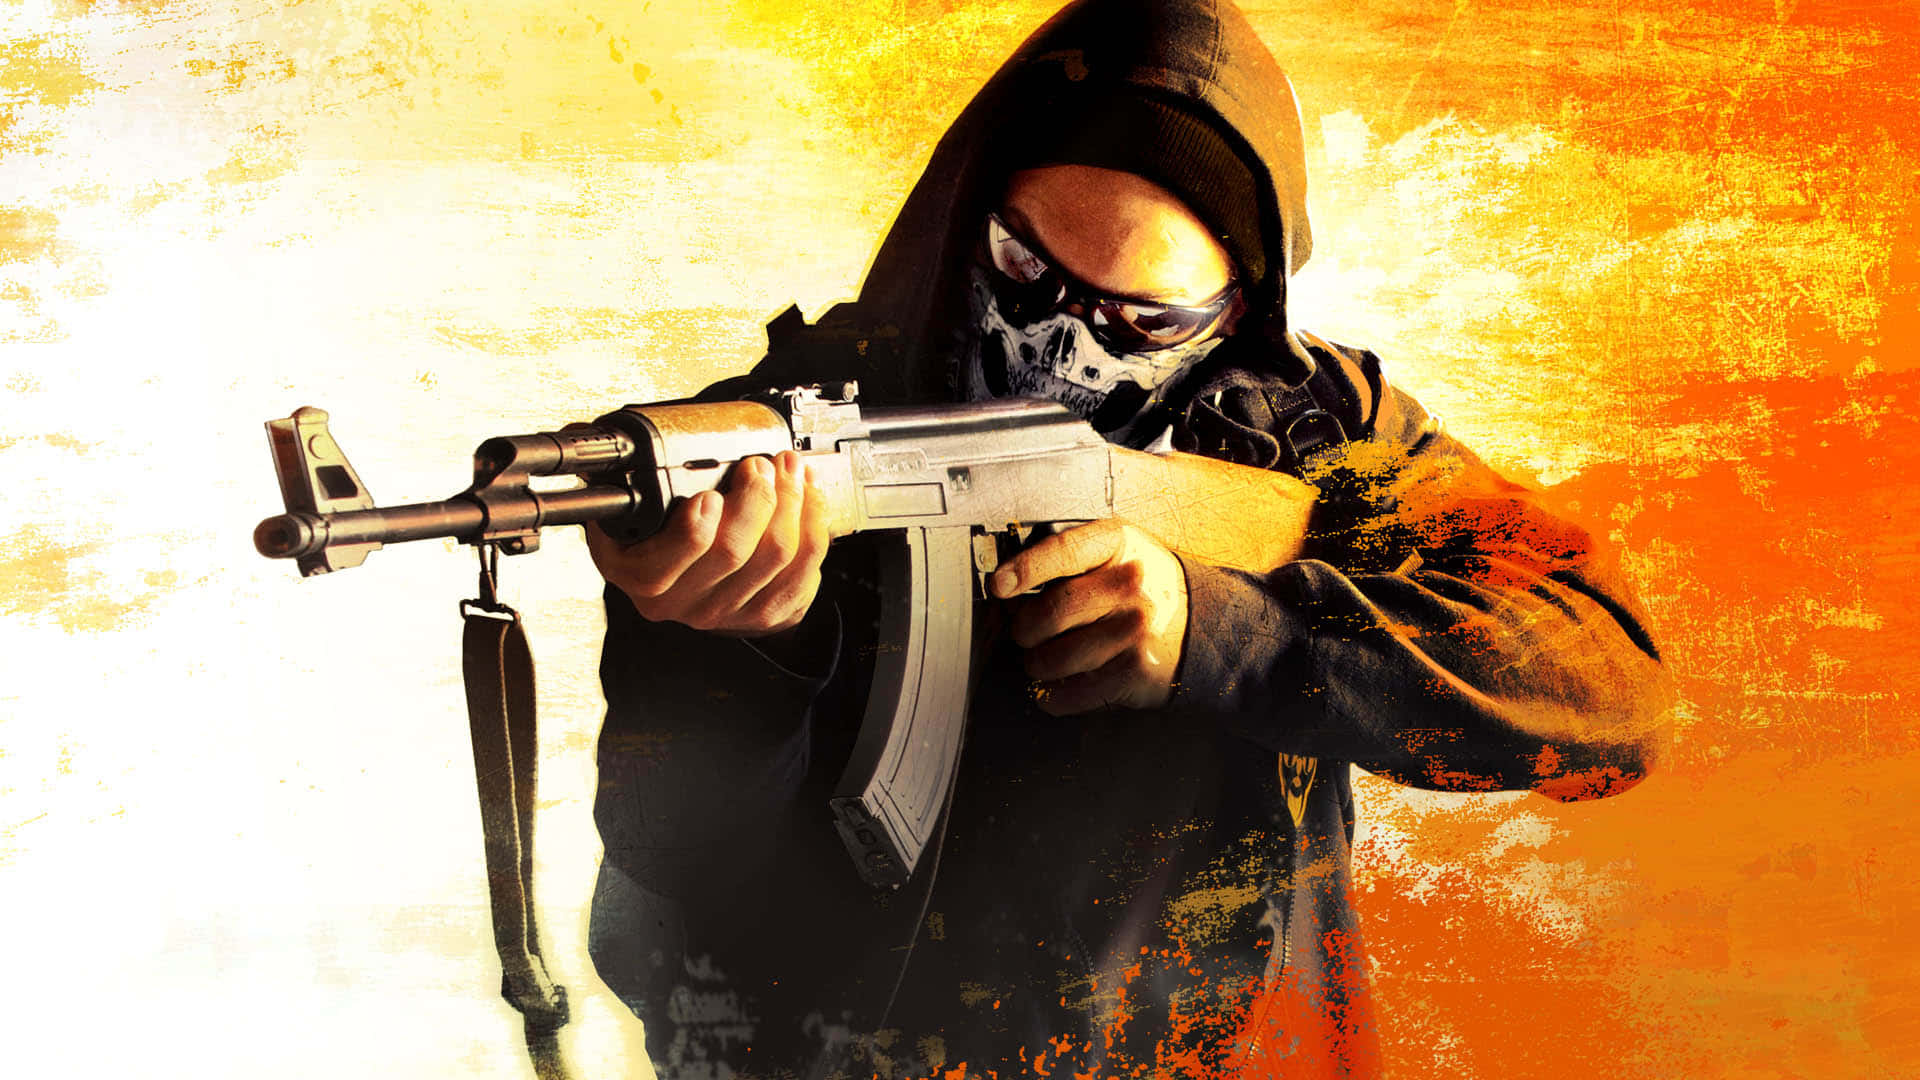 Orangeterrorist 1080p Counter Strike Global Offensive Bakgrundsbild.